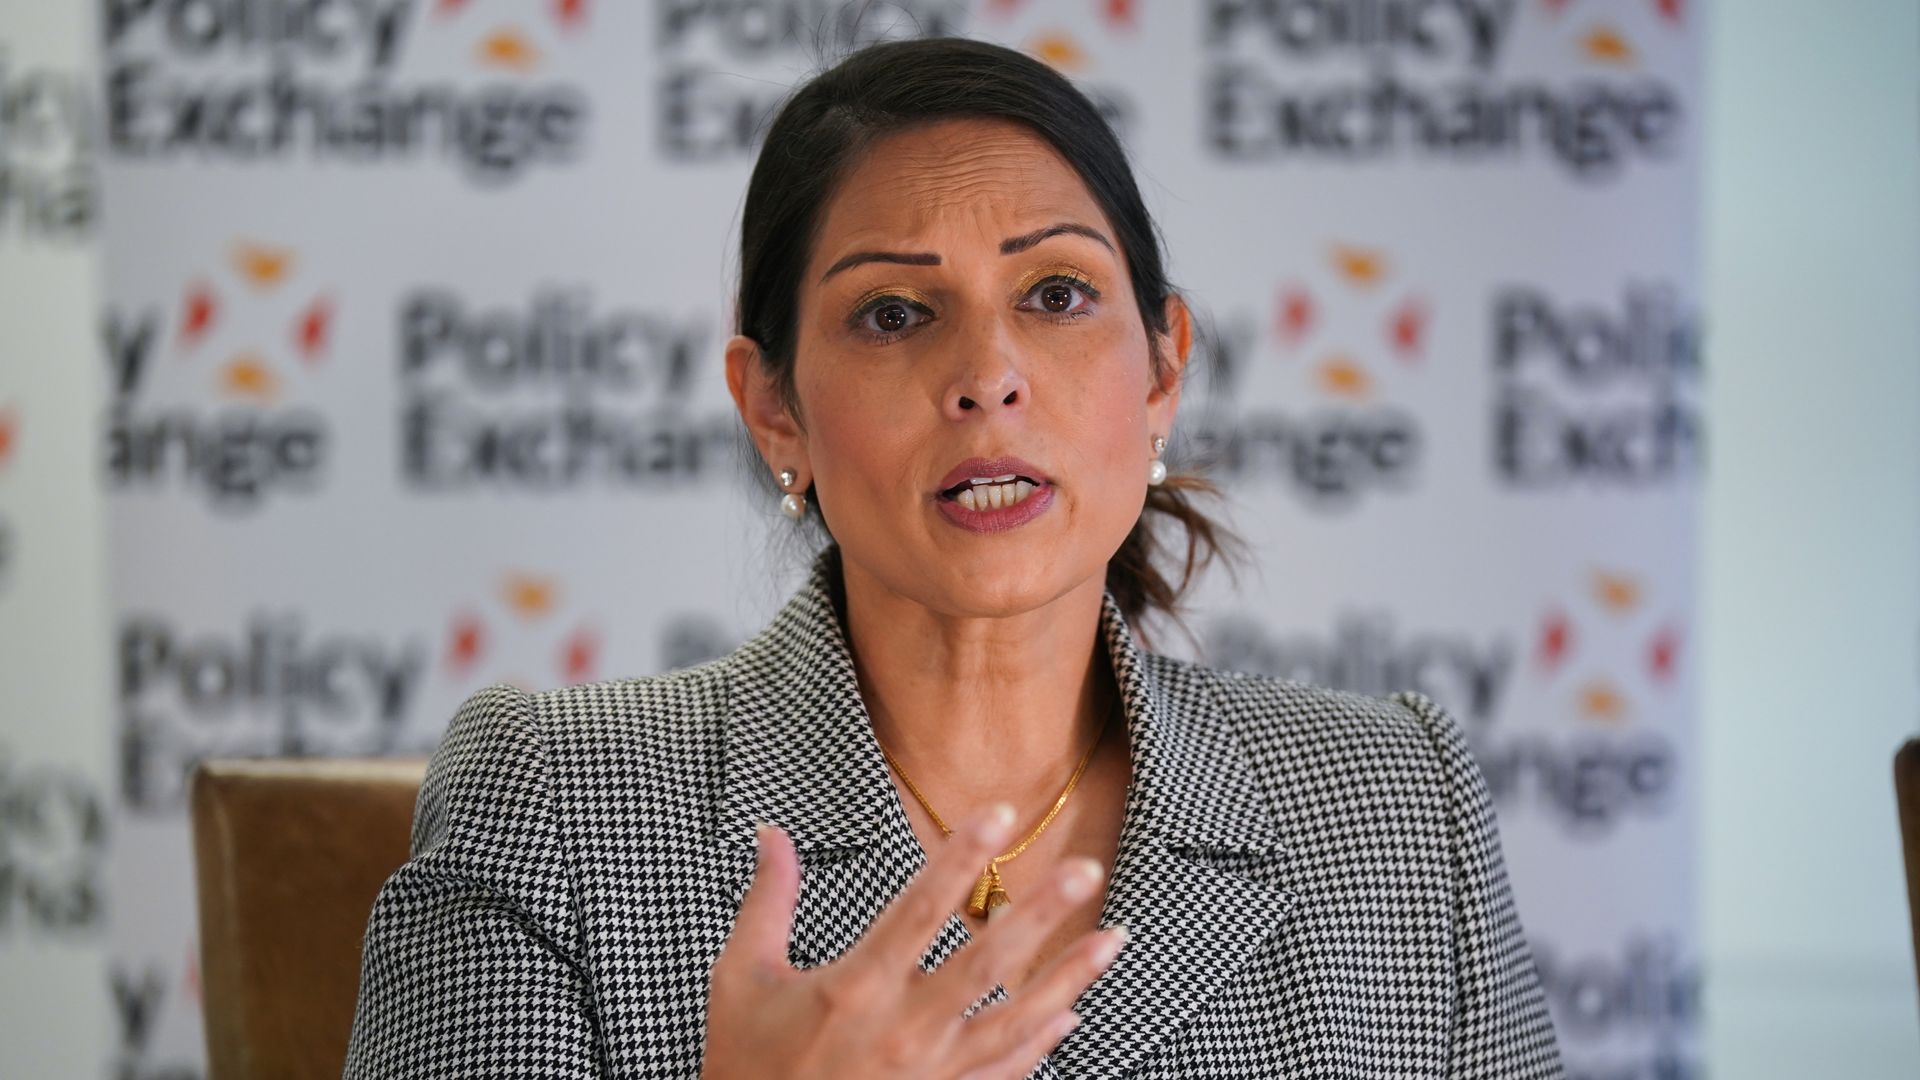 'Time to put unity before personal vendetta': Priti Patel enters Tory leadership race